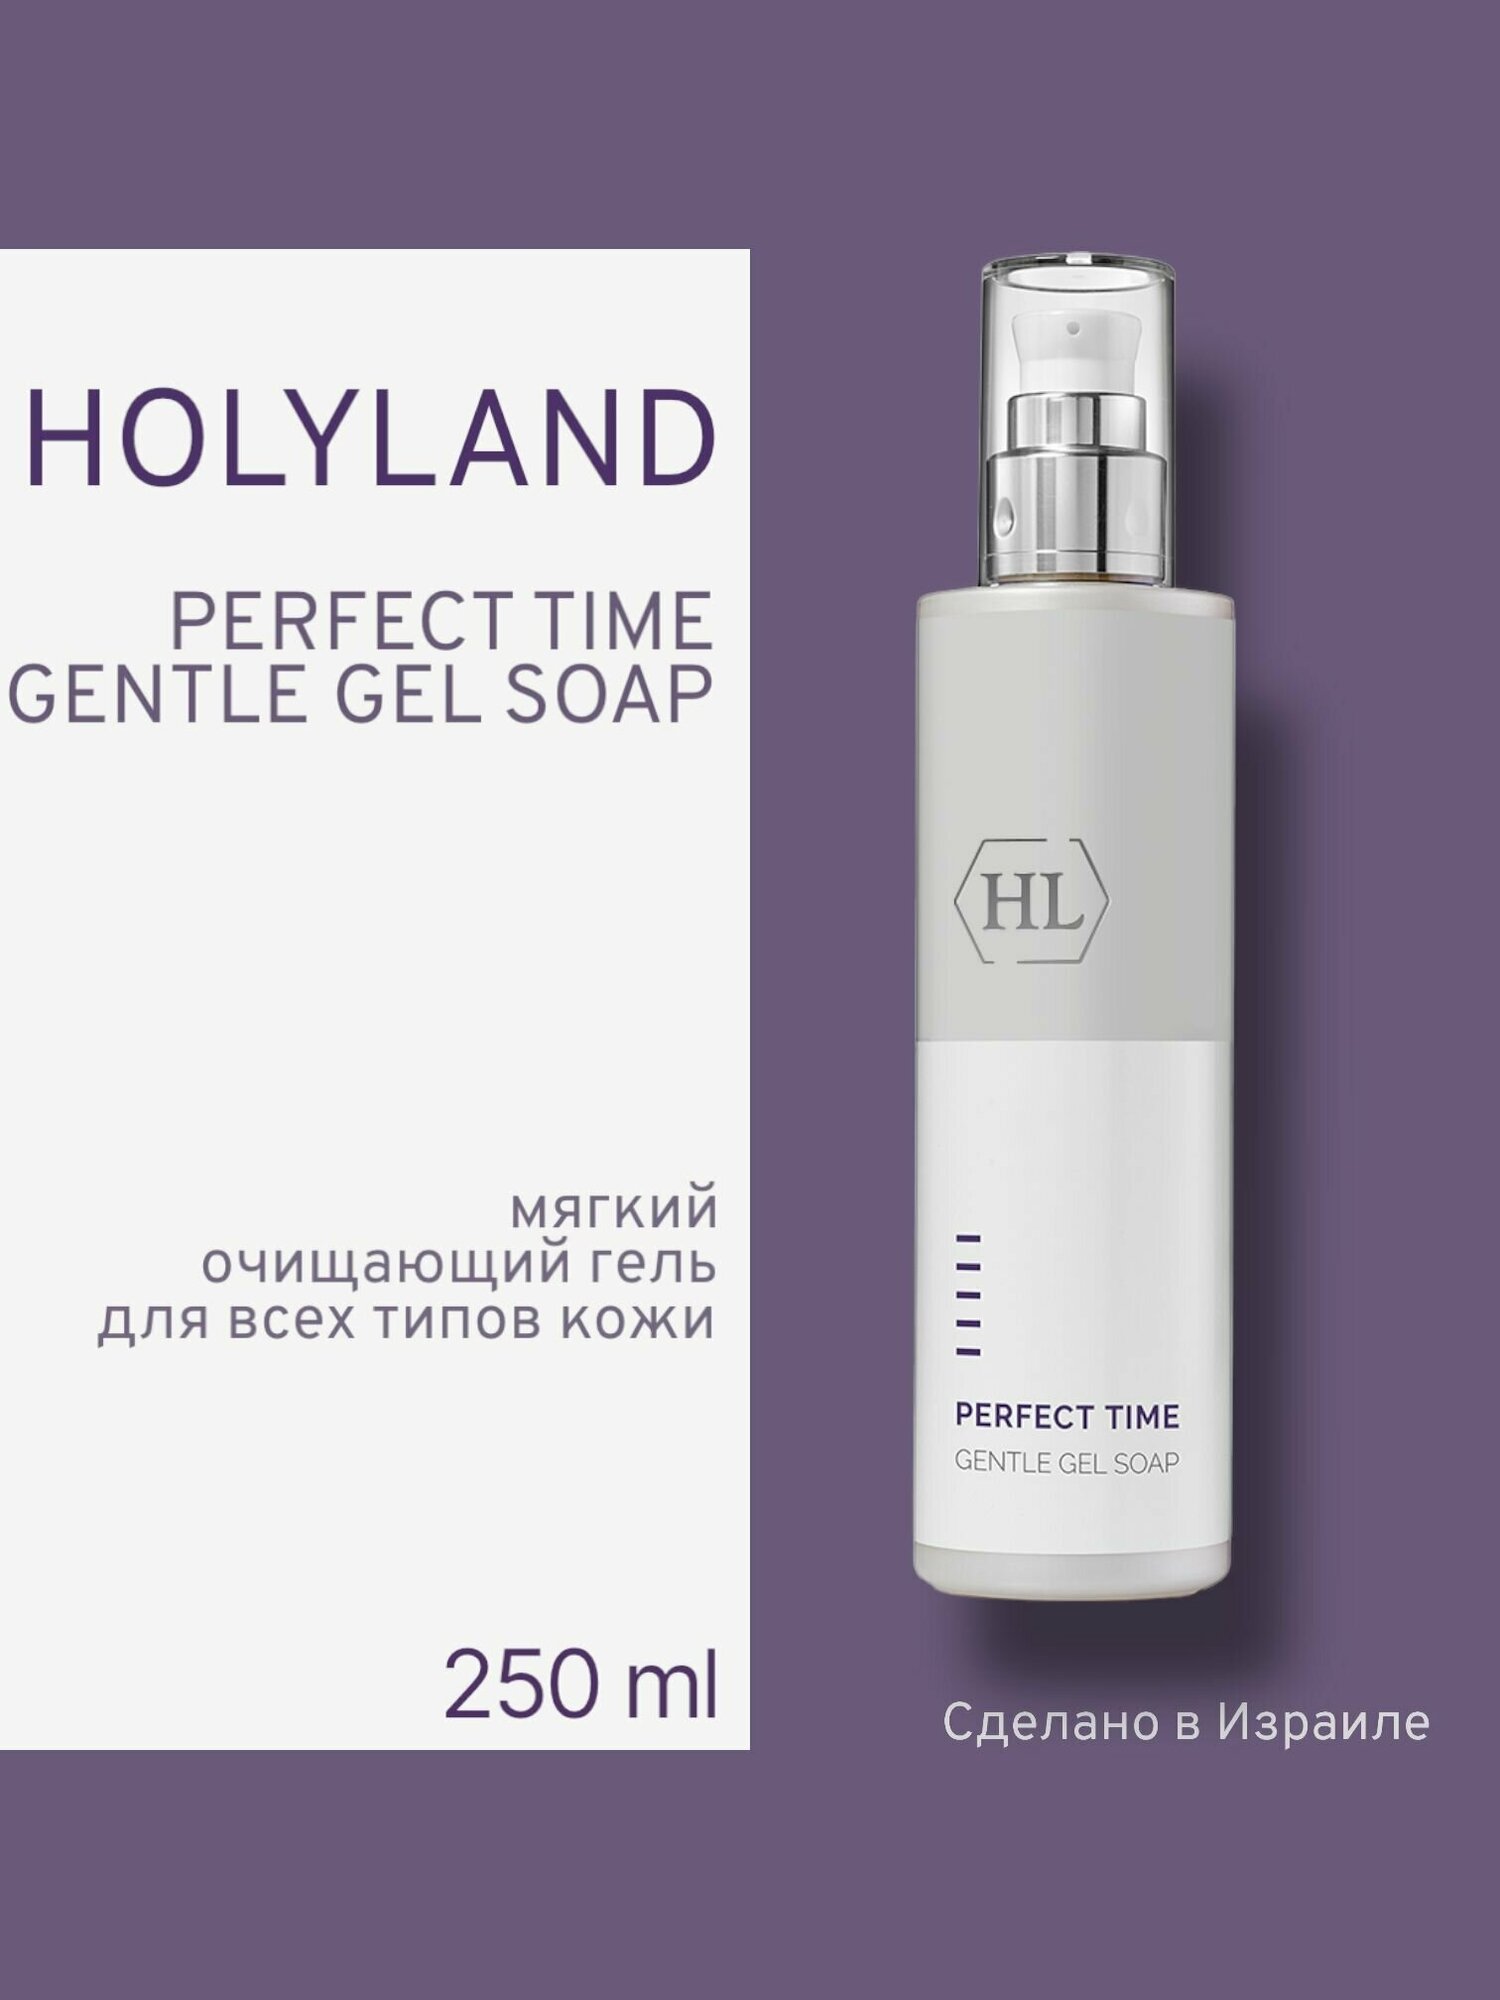 Holy land PERFECT TIME Gentle Gel Soap 250 ml / Очищающий гель 250 мл